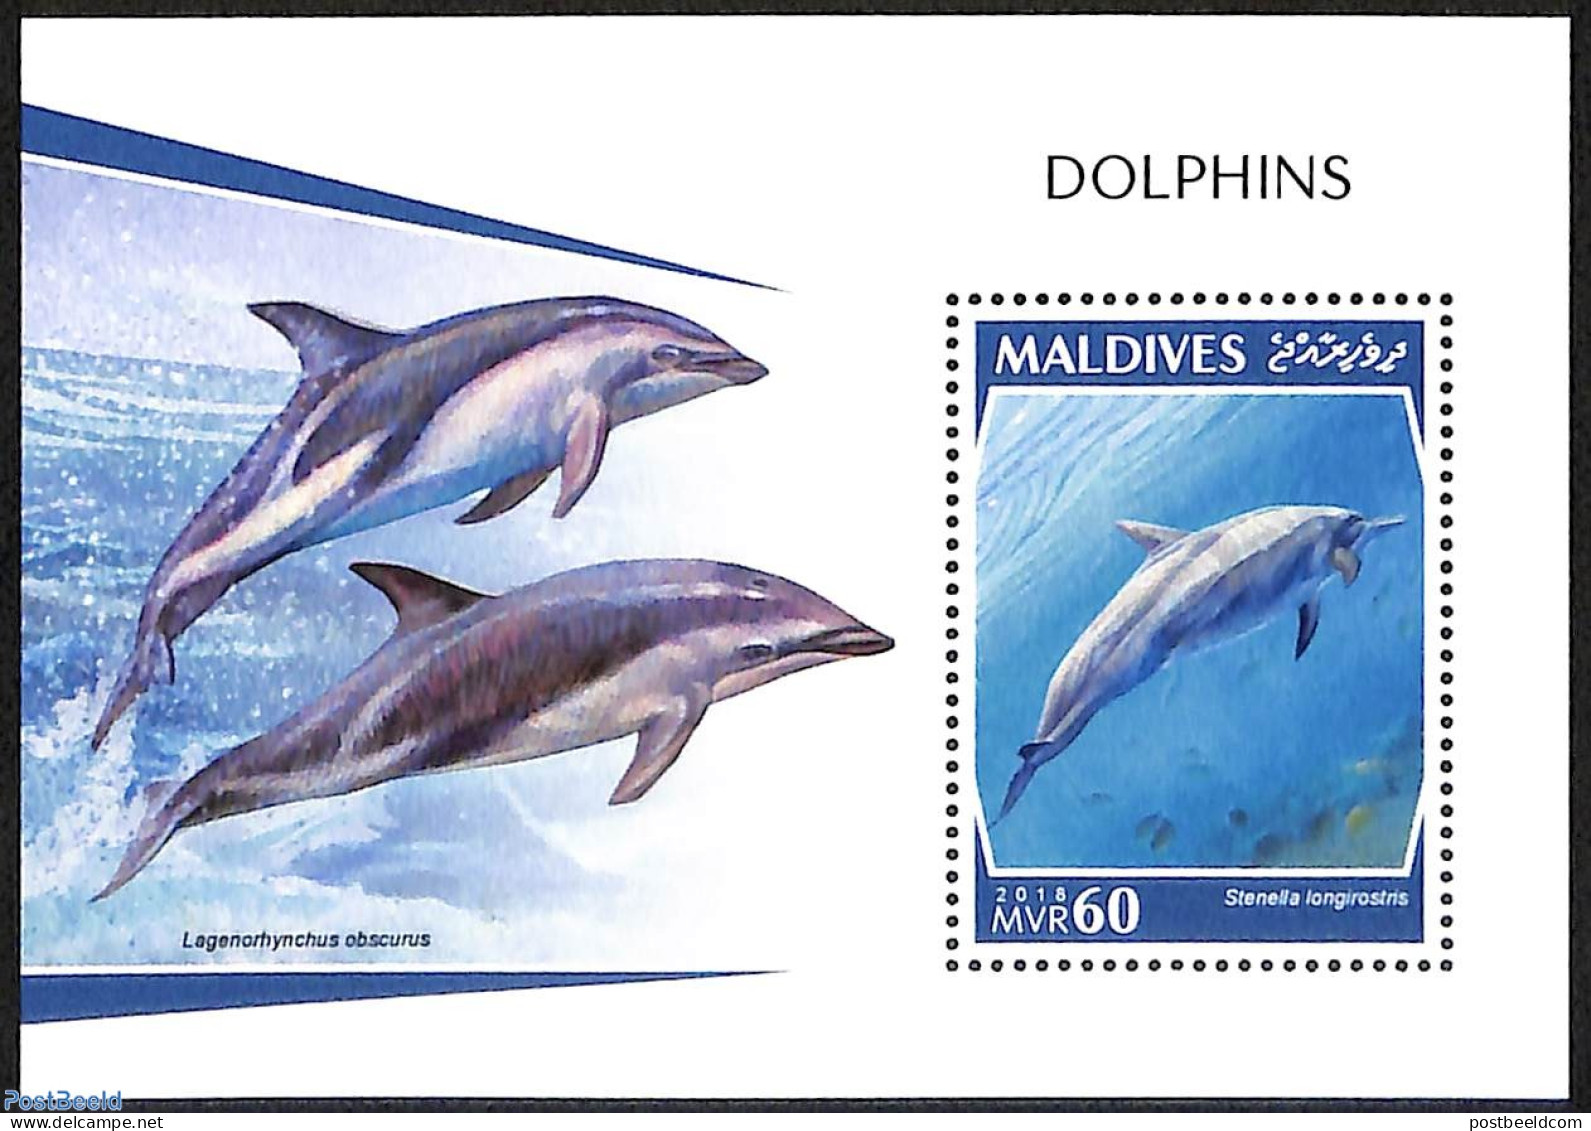 Maldives 2018 Dolphins, Mint NH, Nature - Sea Mammals - Maldiven (1965-...)